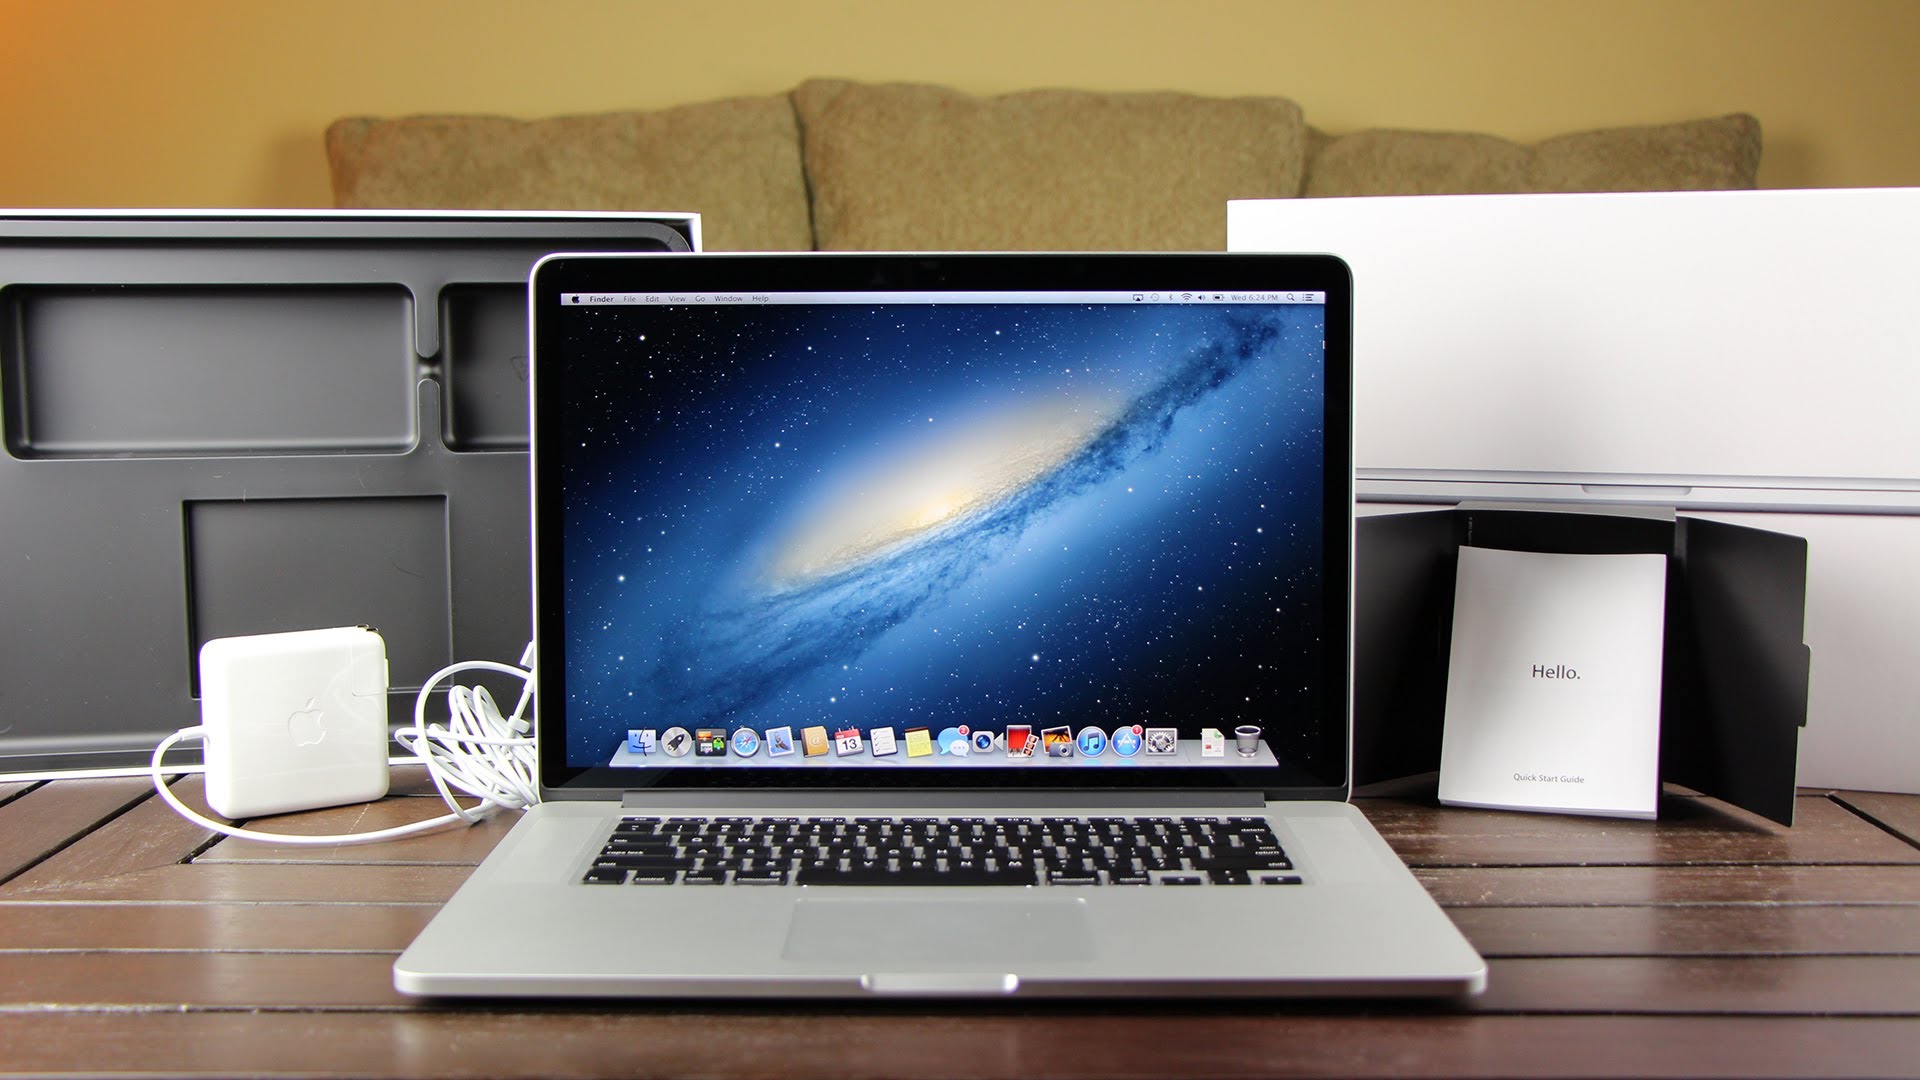 Macbook Pro Early 2015 Staingate - HD Wallpaper 